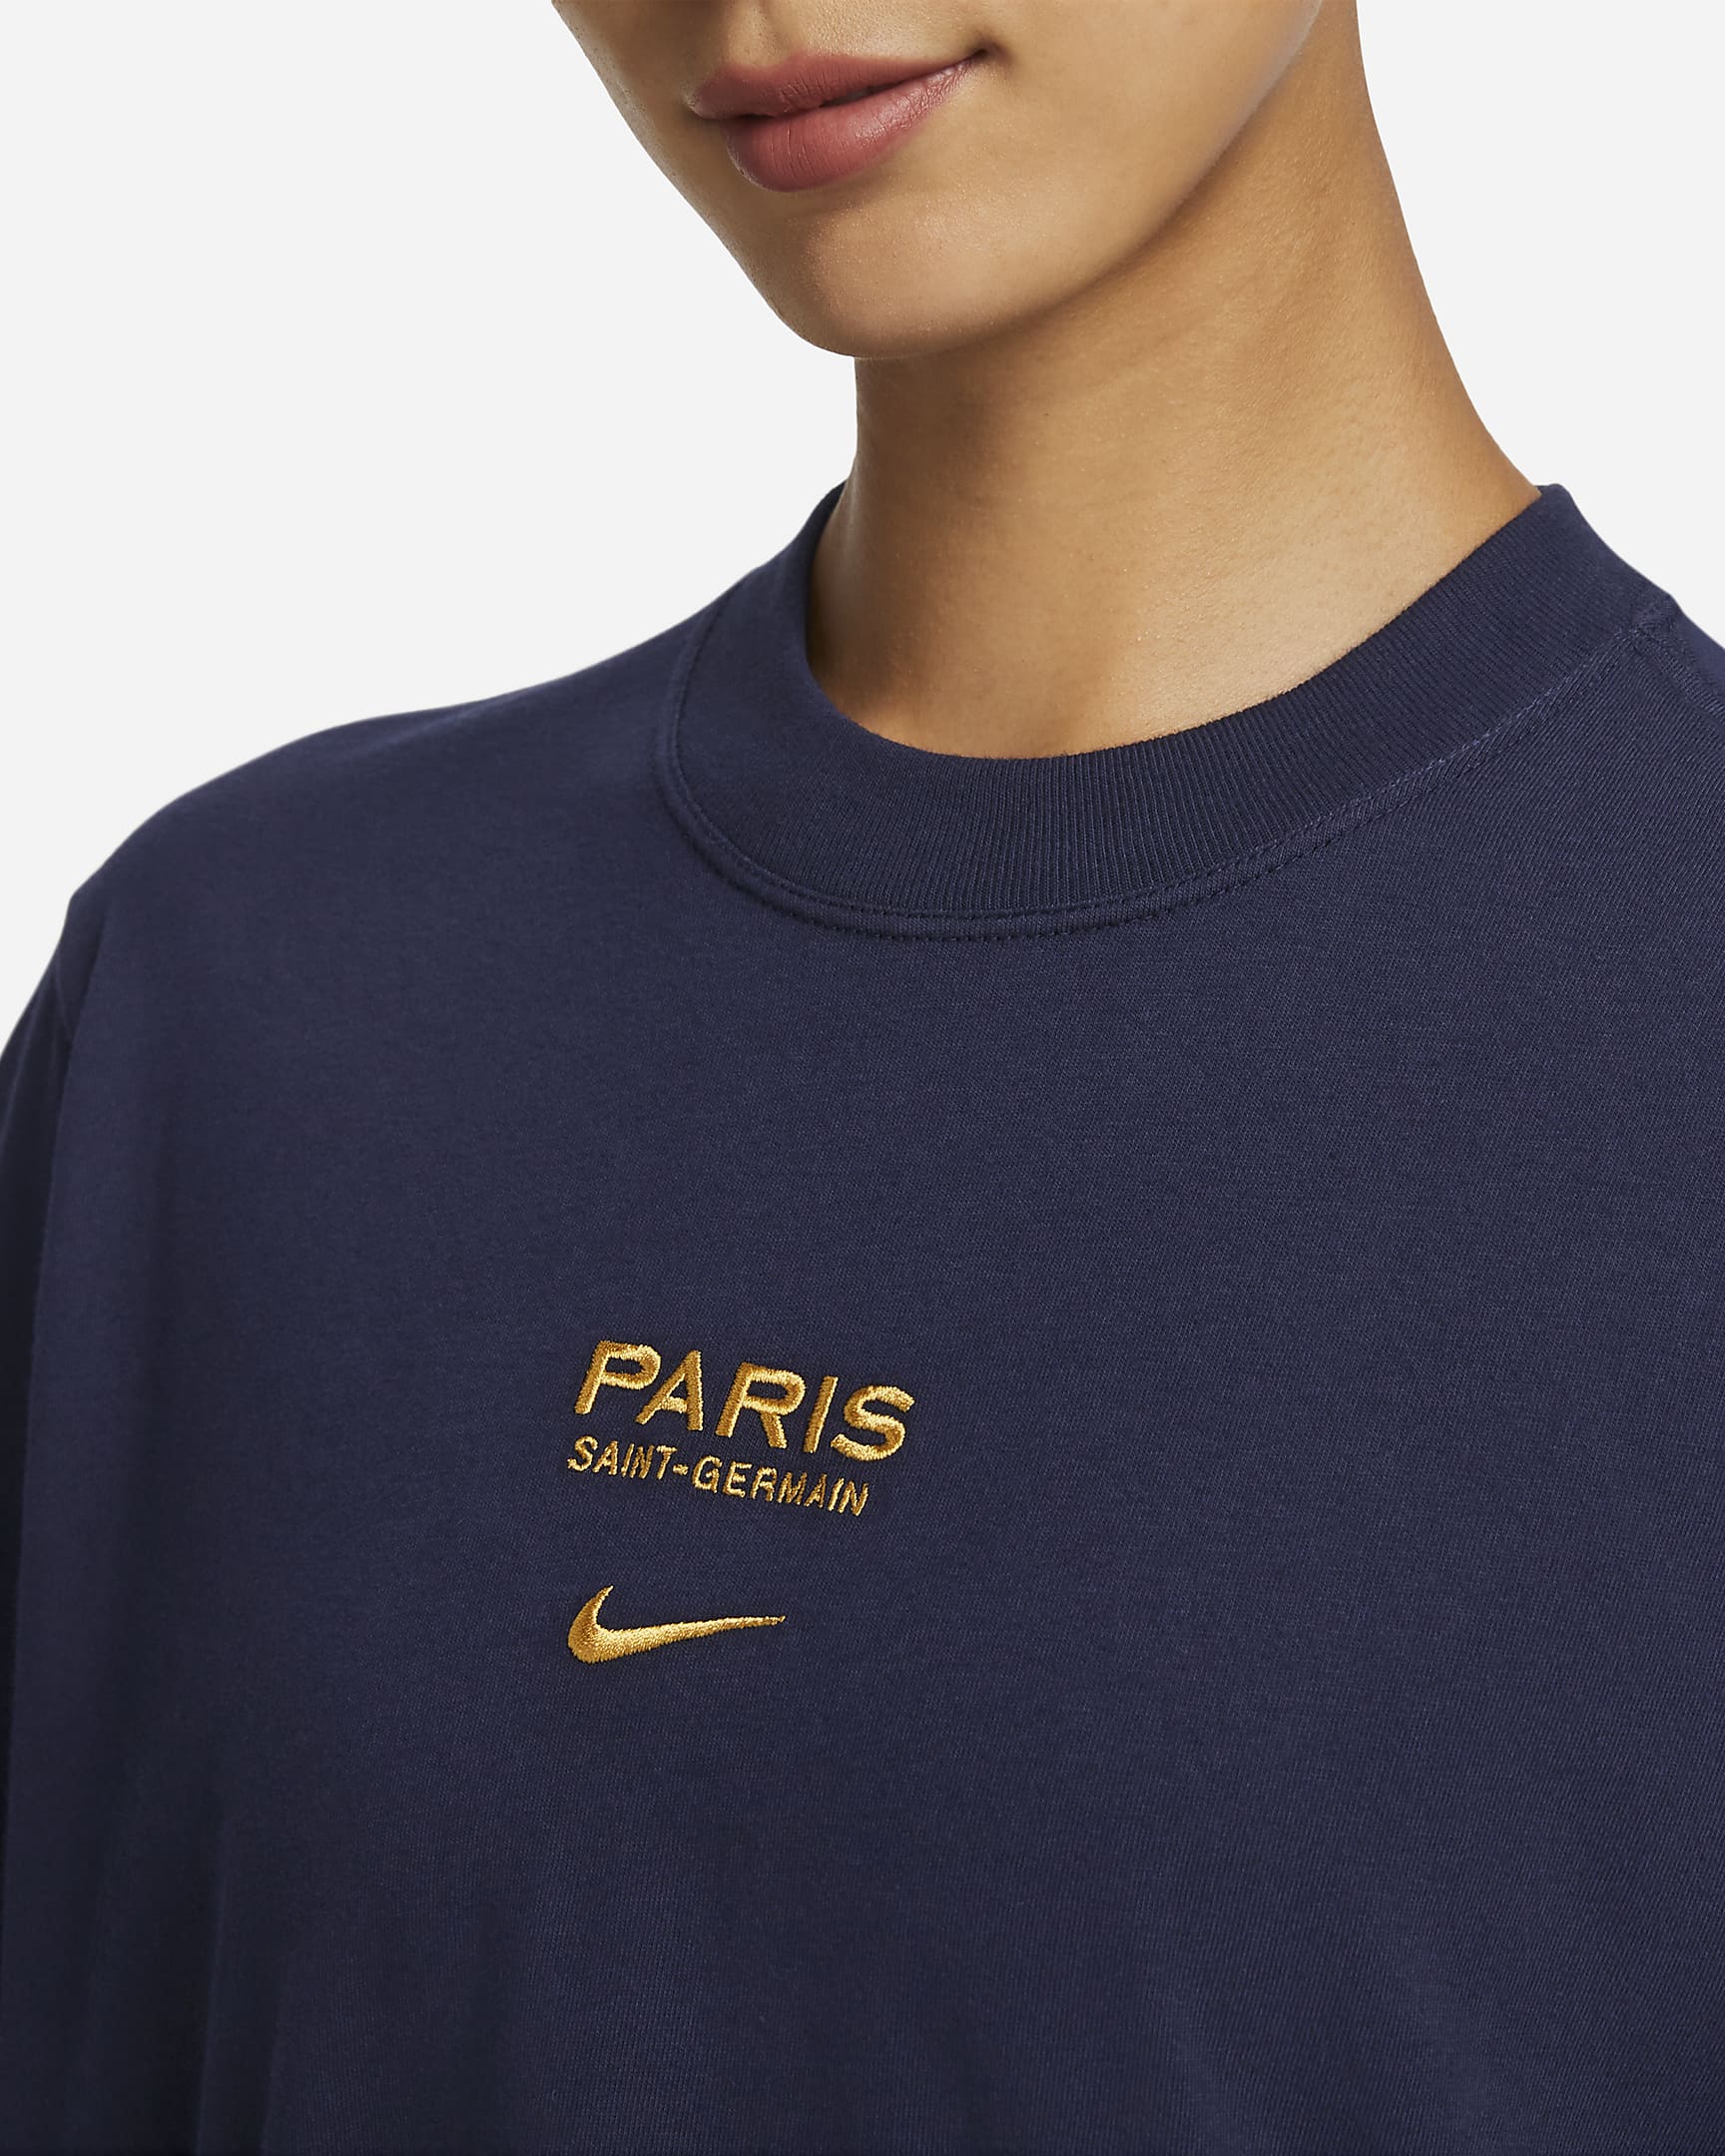 Paris Saint-Germain Women's T-shirt. Nike ID